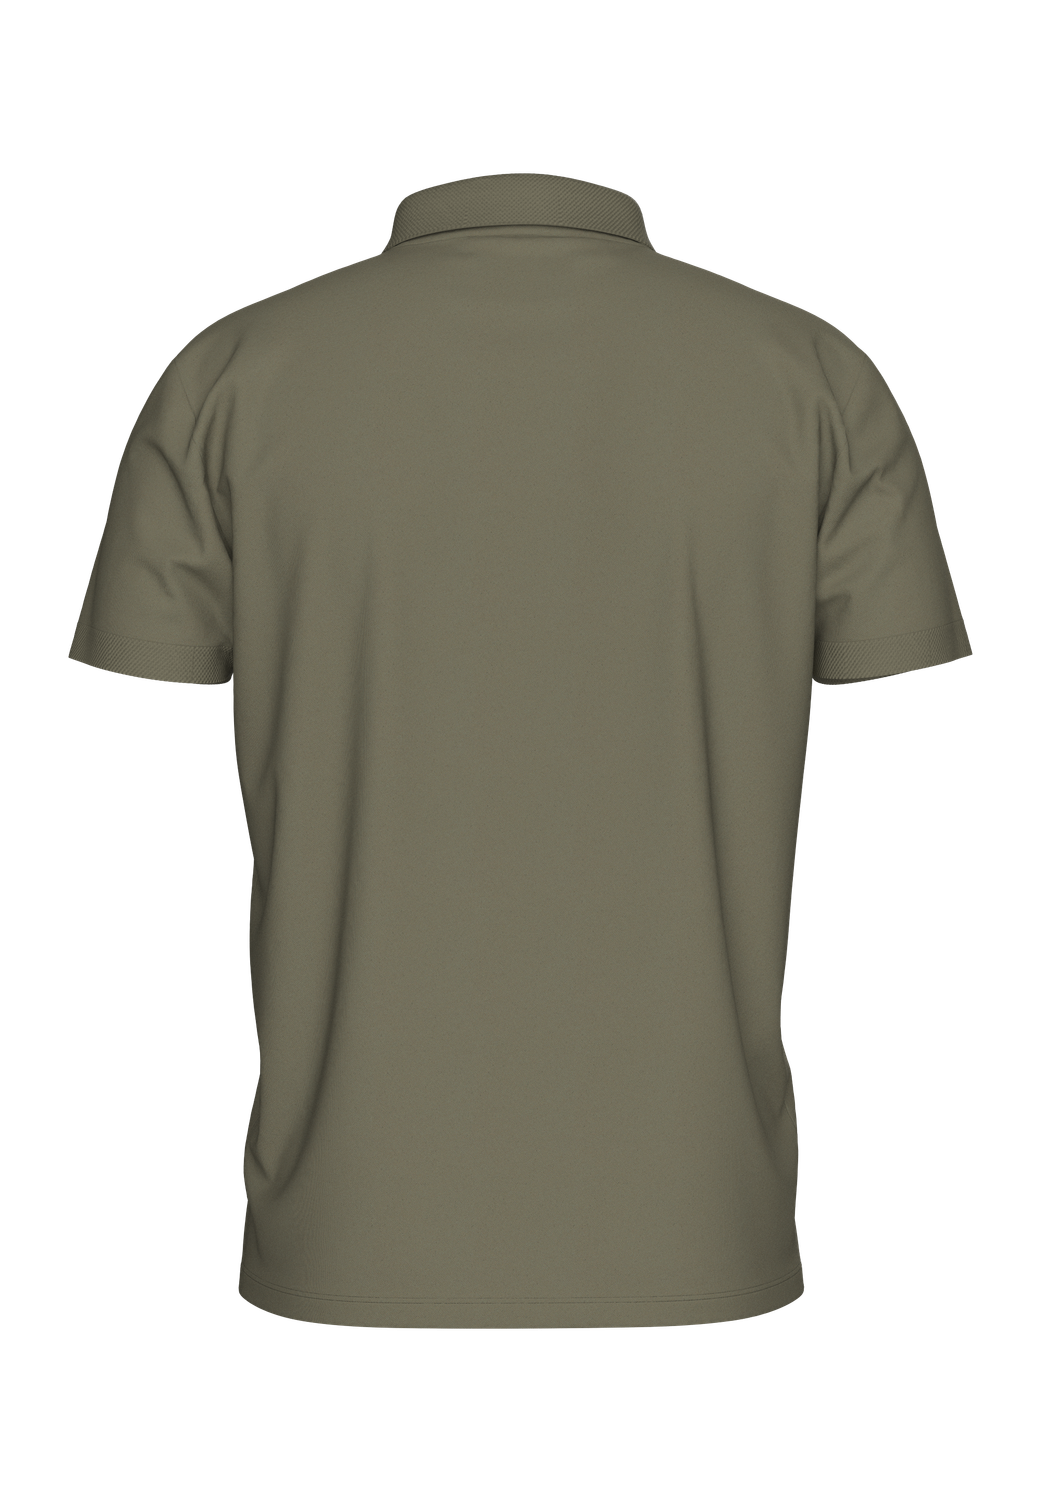 Fave Polo Shirt - Grønn/ Kalamata